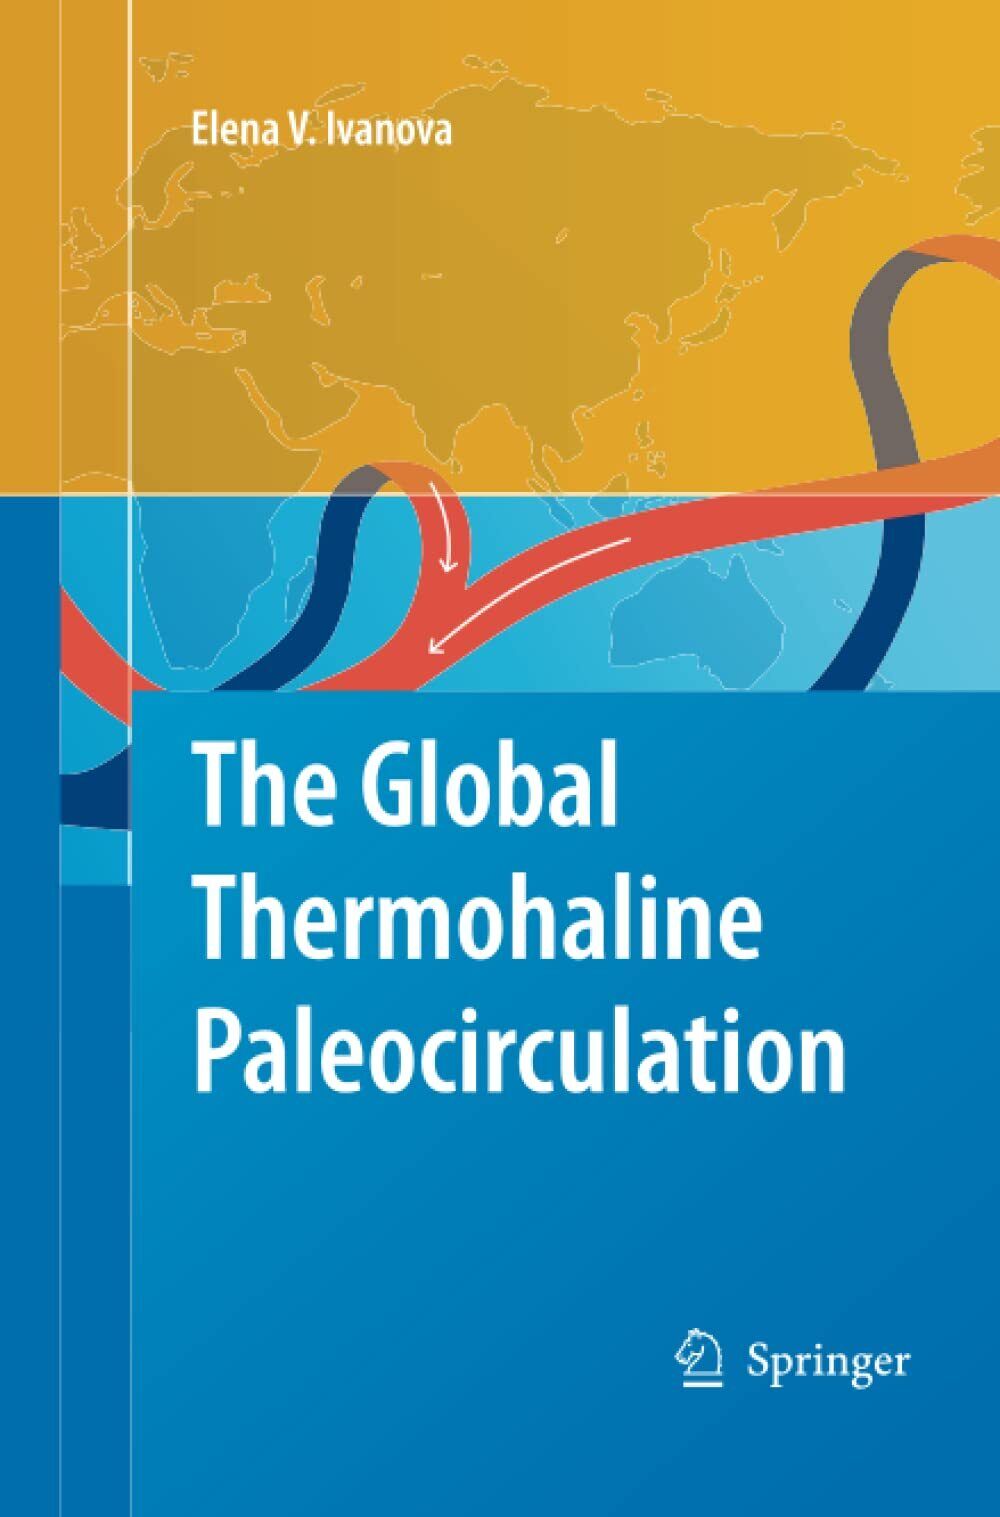 The Global Thermohaline Paleocirculation - Elena Ivanova - Springer, 2014